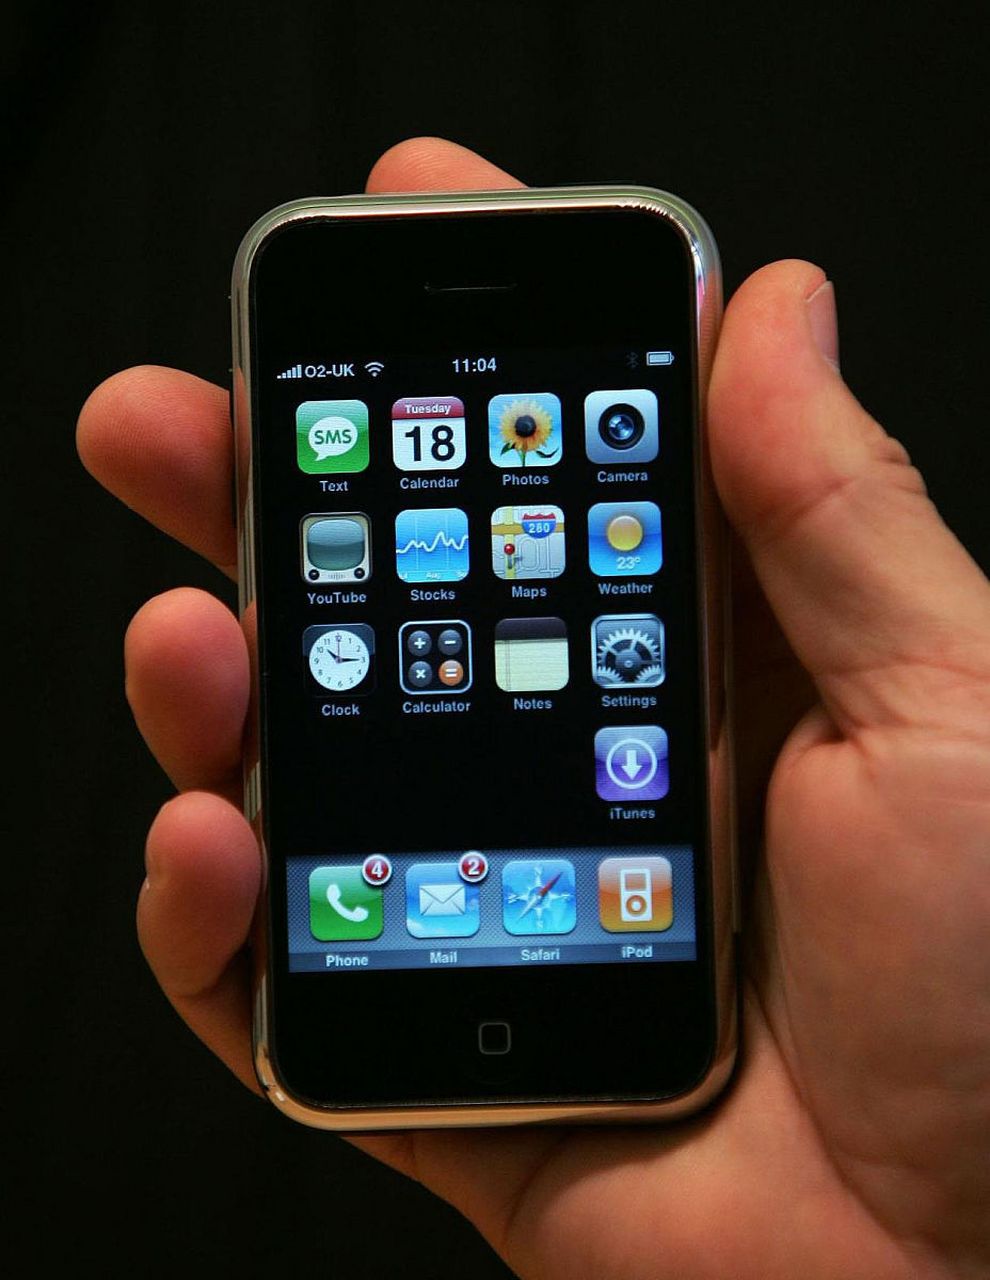 iphone 3g是苹果公司于2008年推出的一款经典智能手机